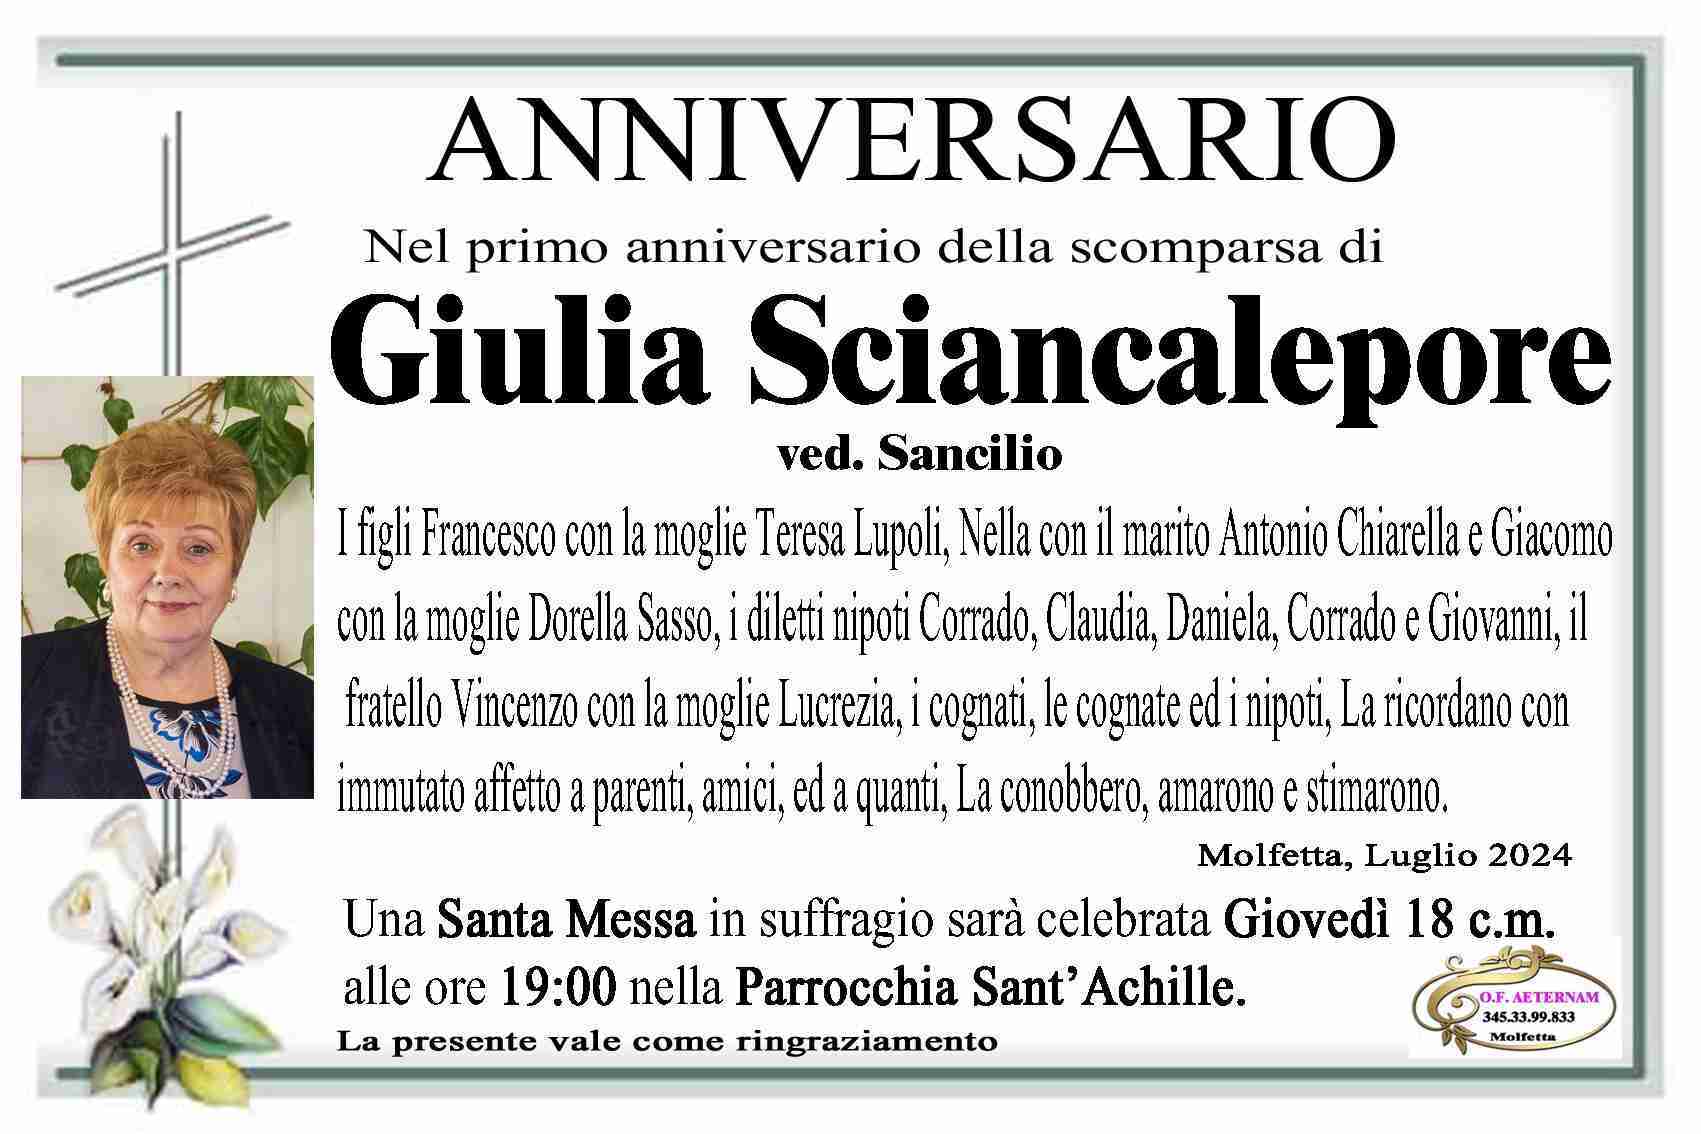 Giulia Sciancalepore